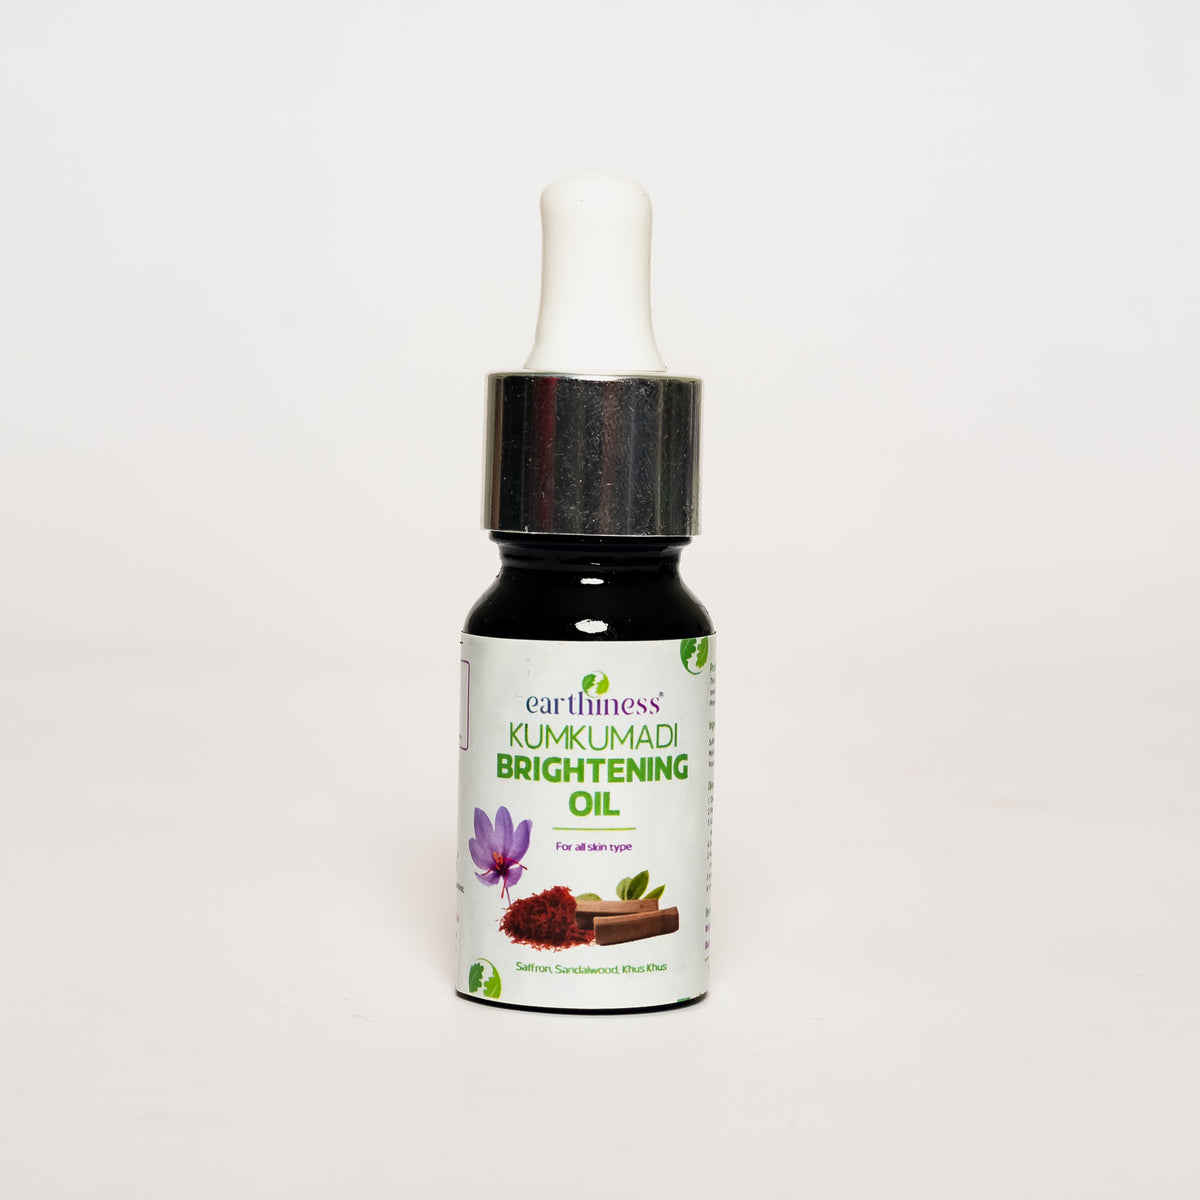 Organic Kumkumadi Brightening Oil with Herbs & Mulethi For Blemish Free Skin